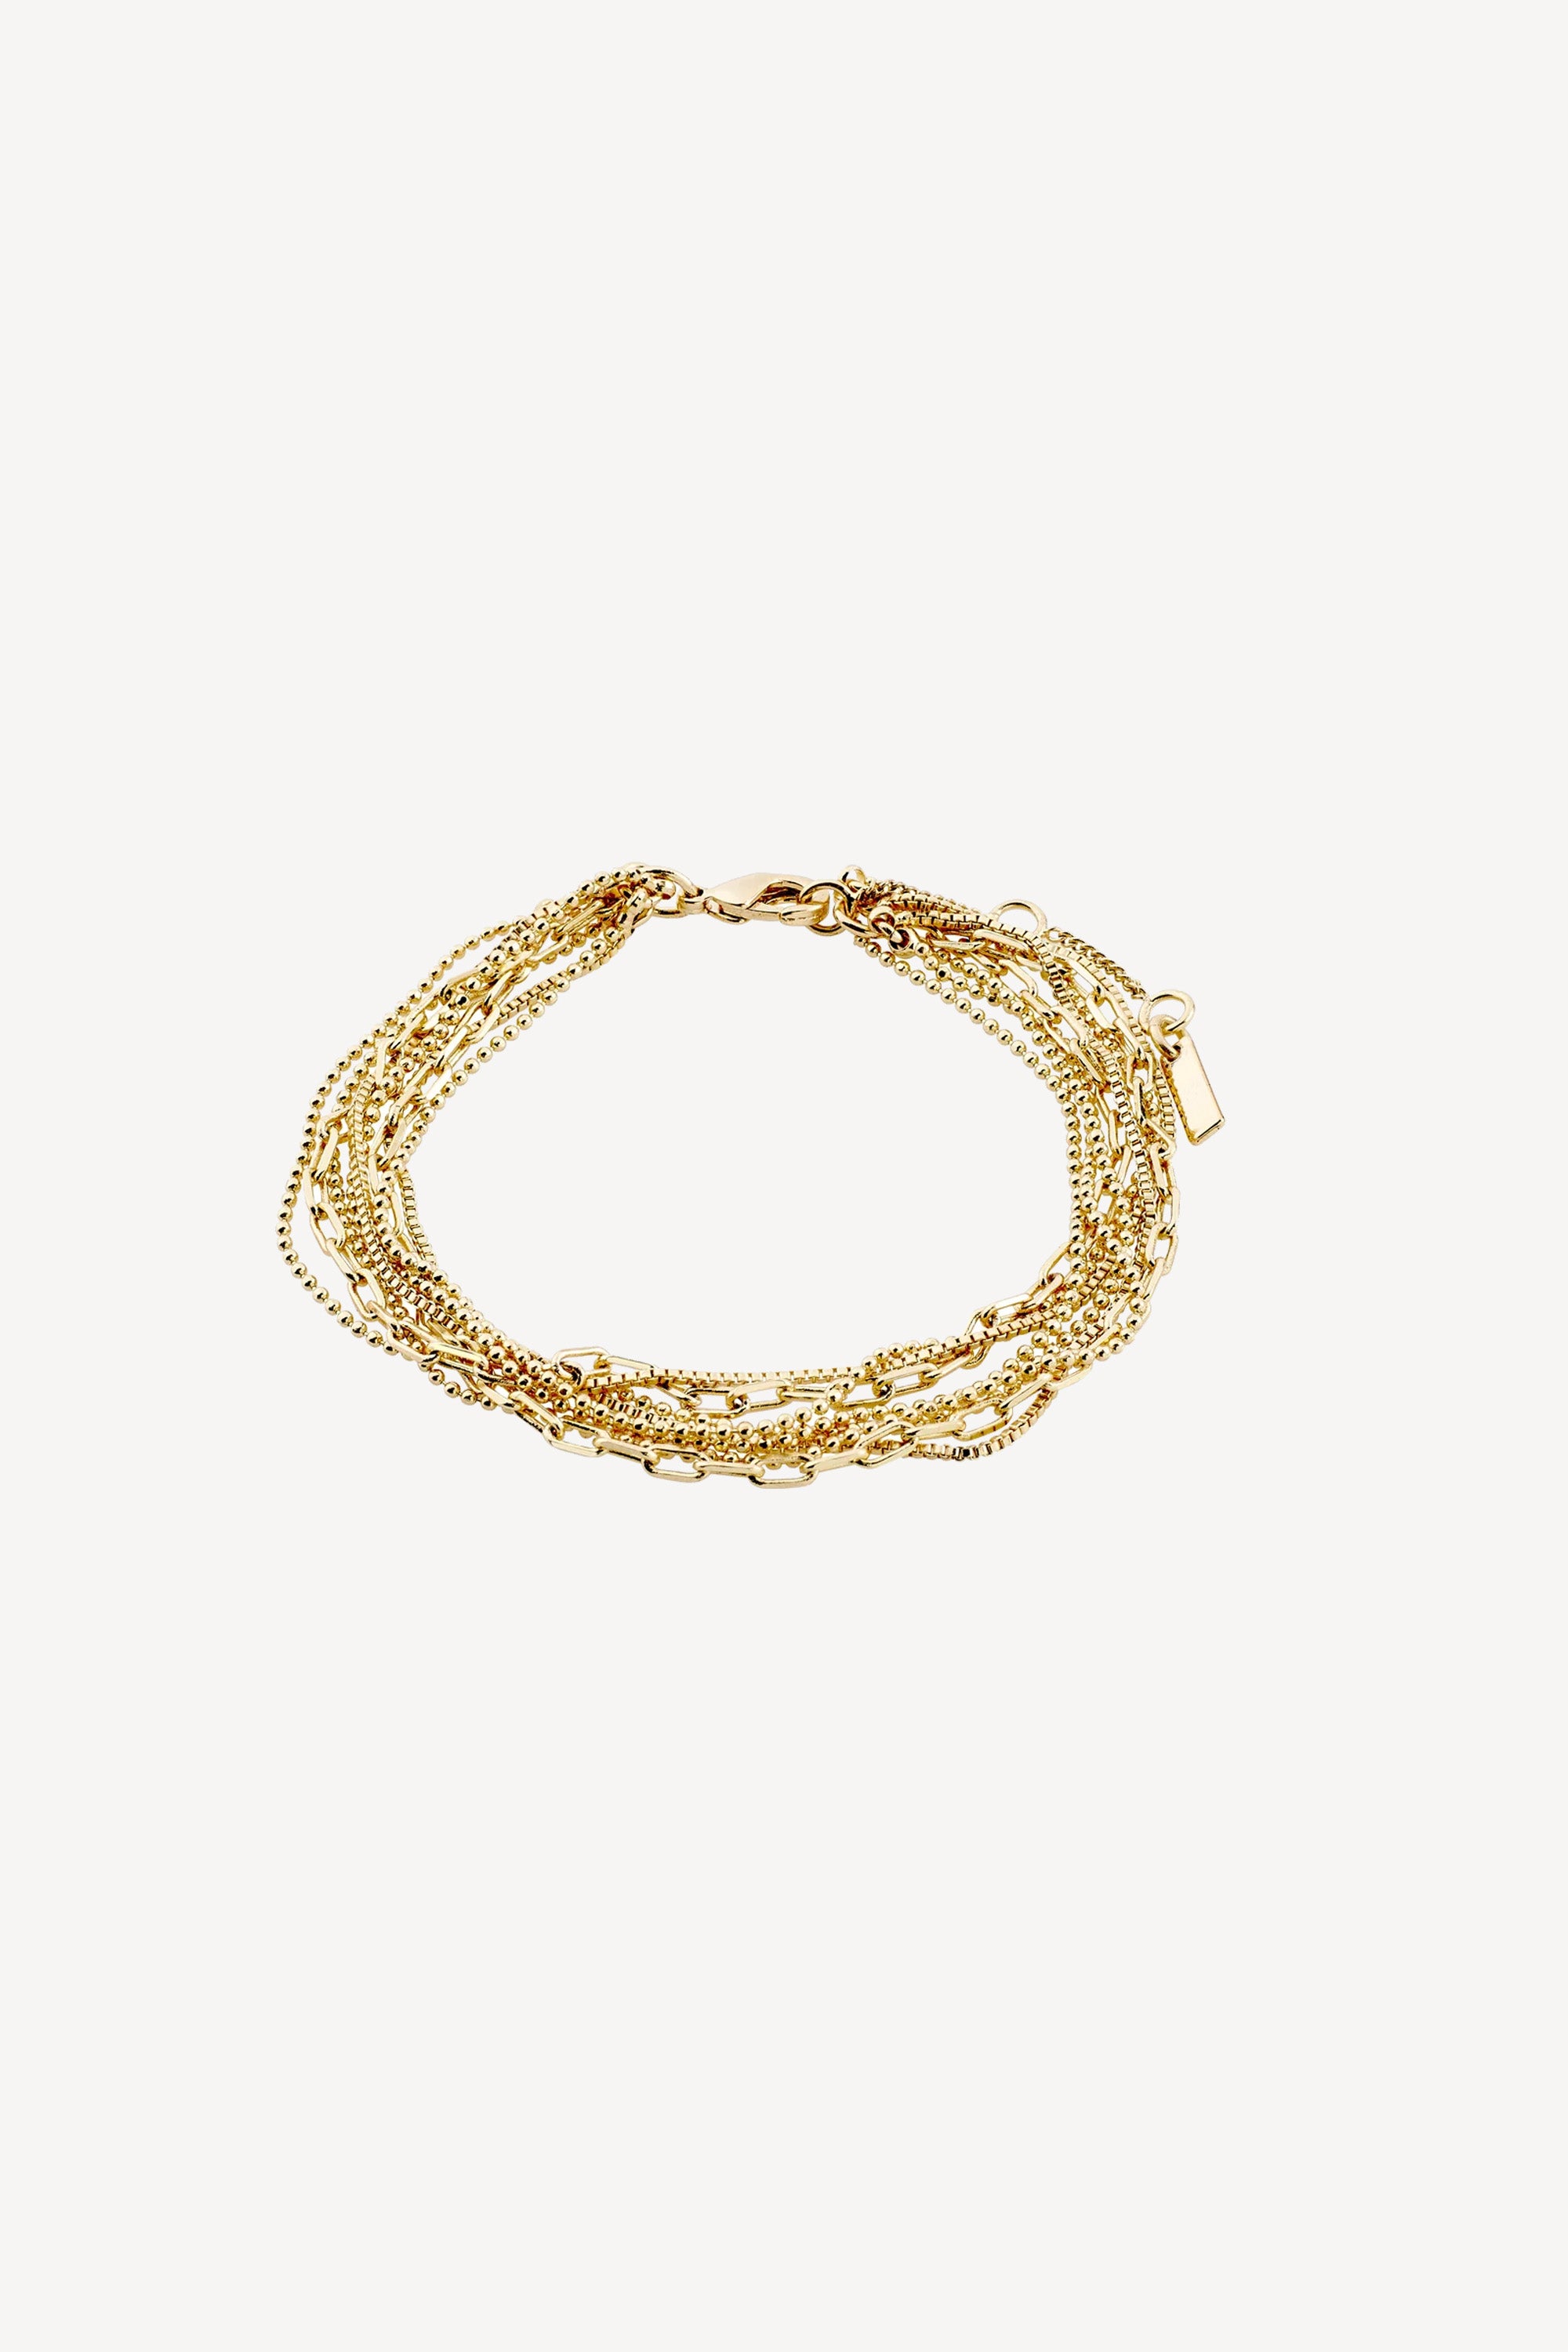 Lily chain Bracelet Gold